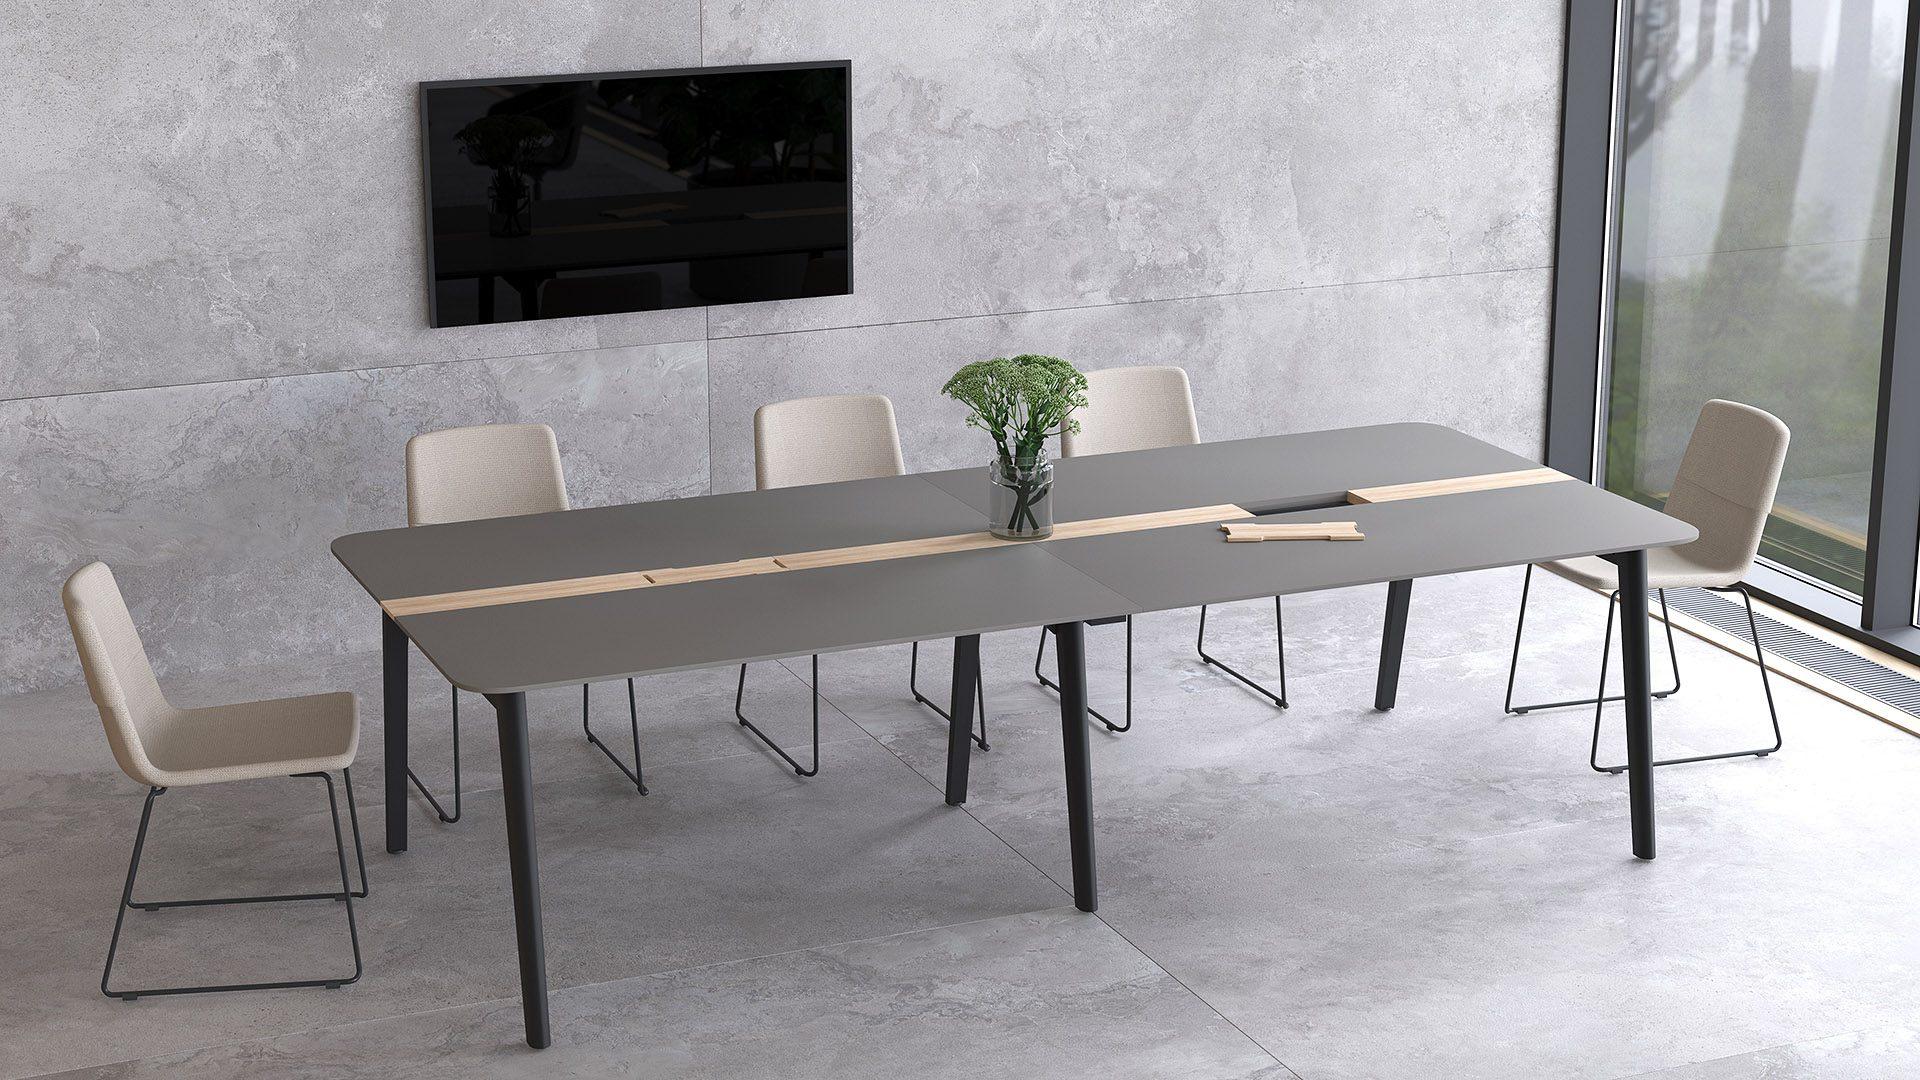 Create sleek and smart board room style meeting areas with Nova Wood meeting tables